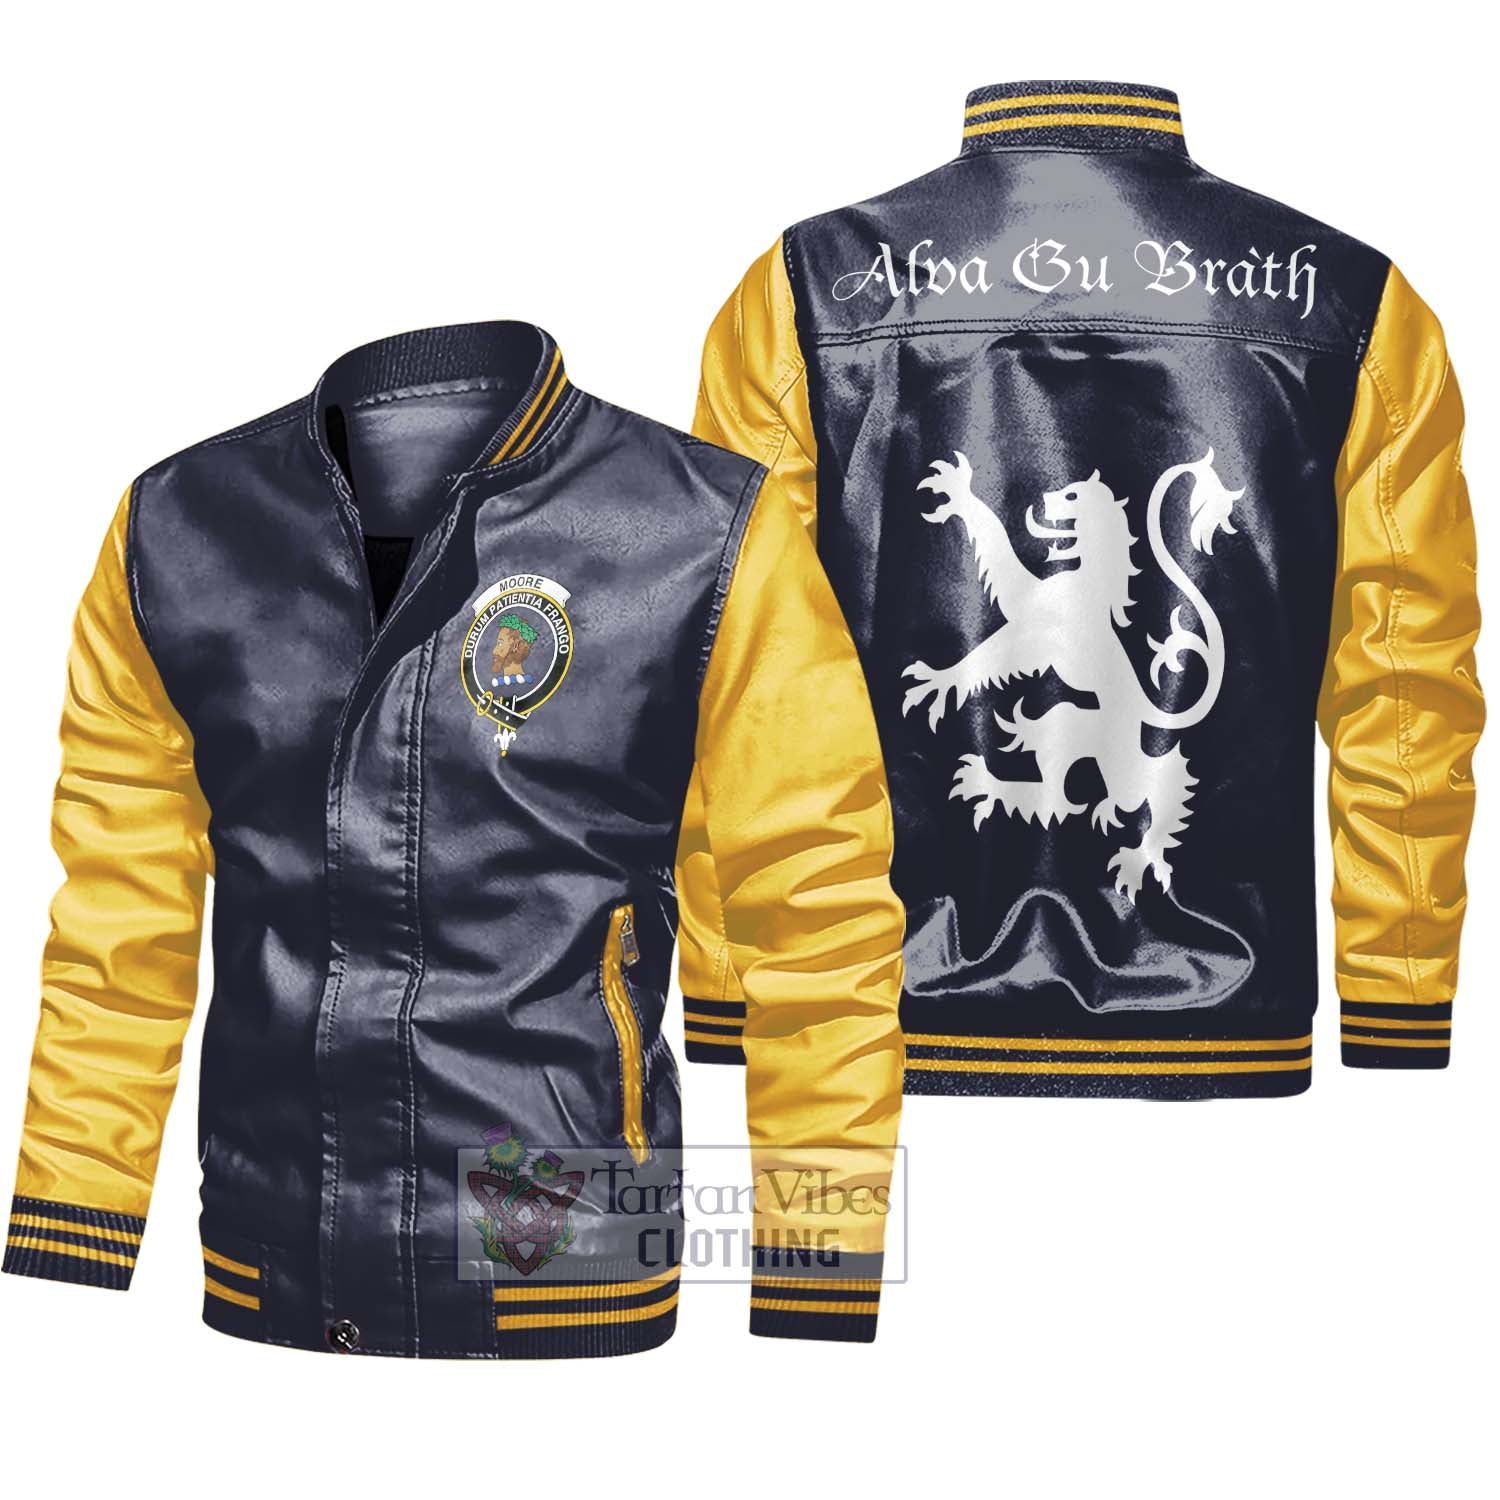 Tartan Vibes Clothing Moore Family Crest Leather Bomber Jacket Lion Rampant Alba Gu Brath Style